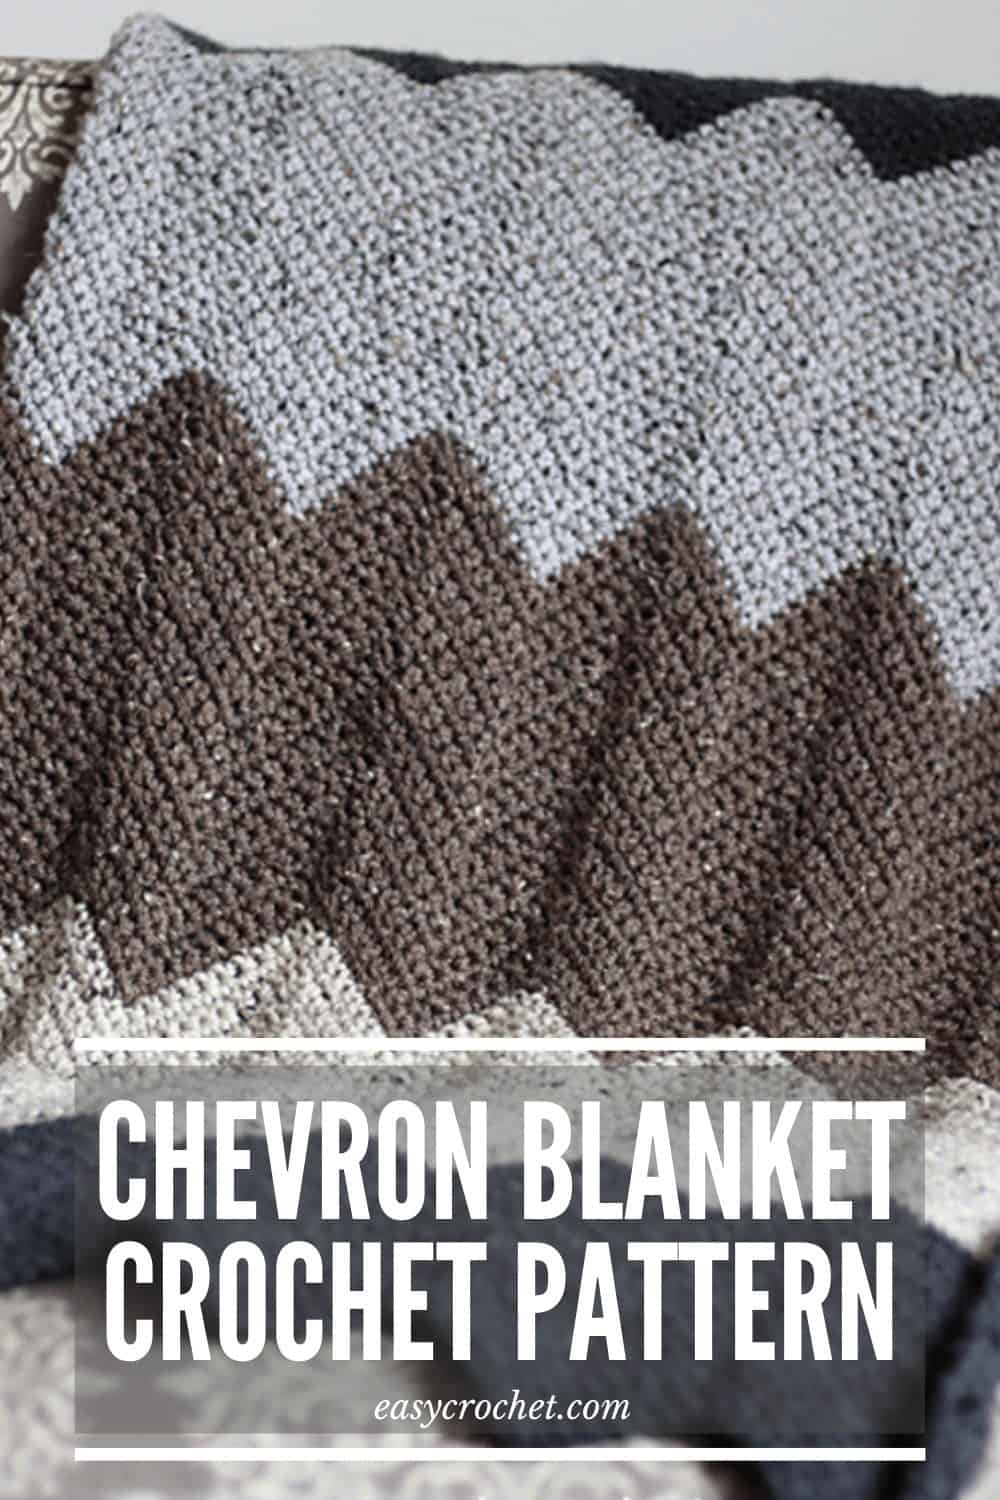 Chevron Crochet Blanket Pattern - Use this FREE crochet pattern to create your next chevron throw blanket. easycrochet.com via @easycrochetcom